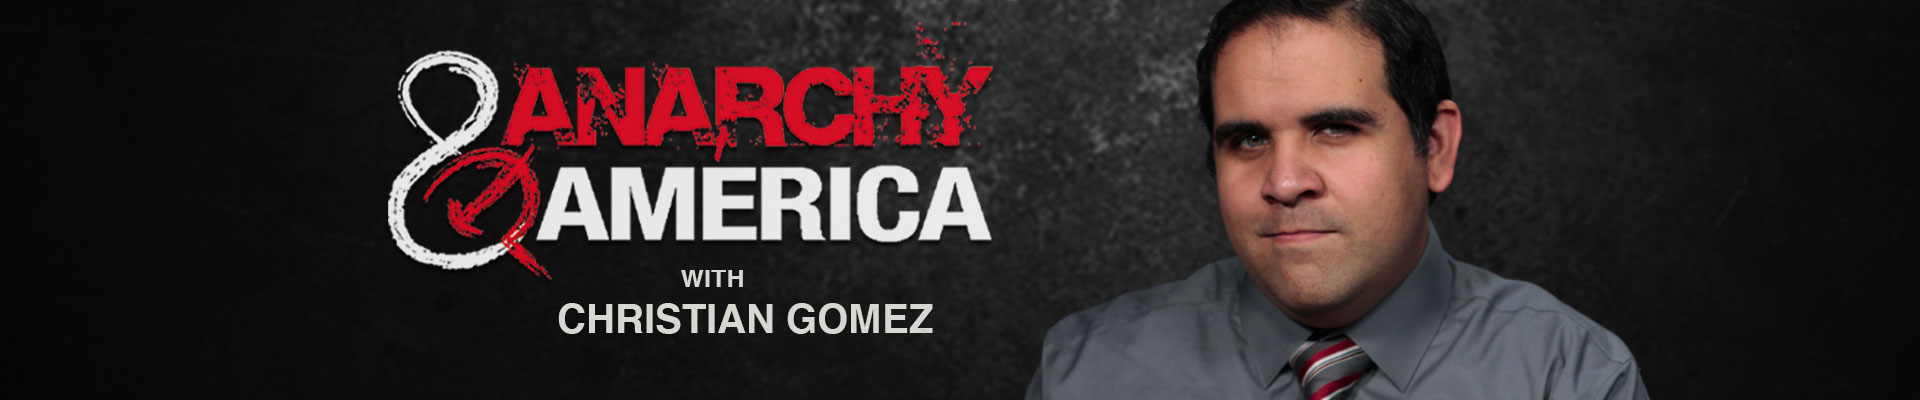 John Birch Society Video: Anarchy & America